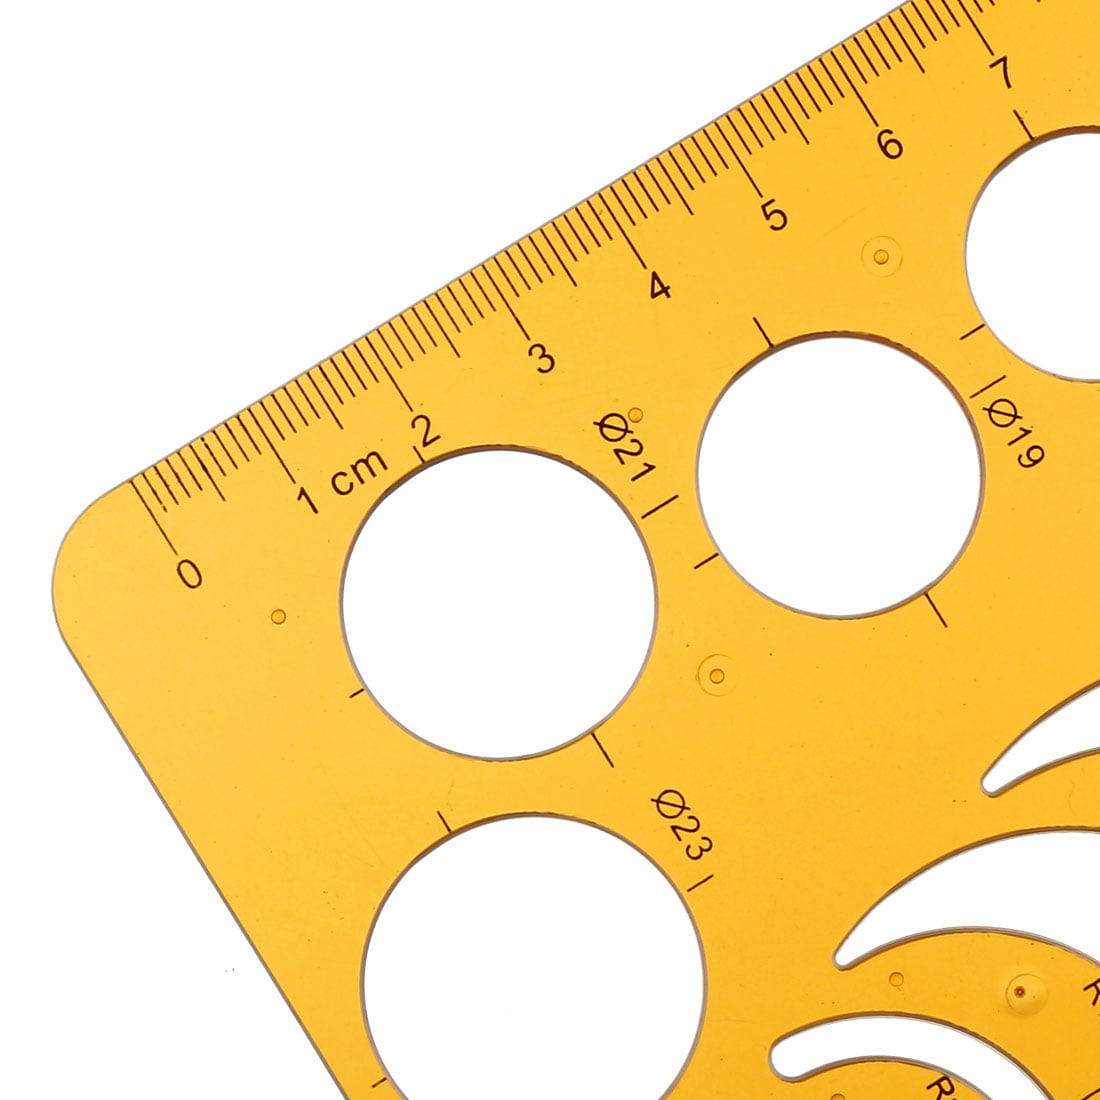 2pcs Geometric Drawing Template Measuring Ruler Plastic 23cm 18cm for Art Design 